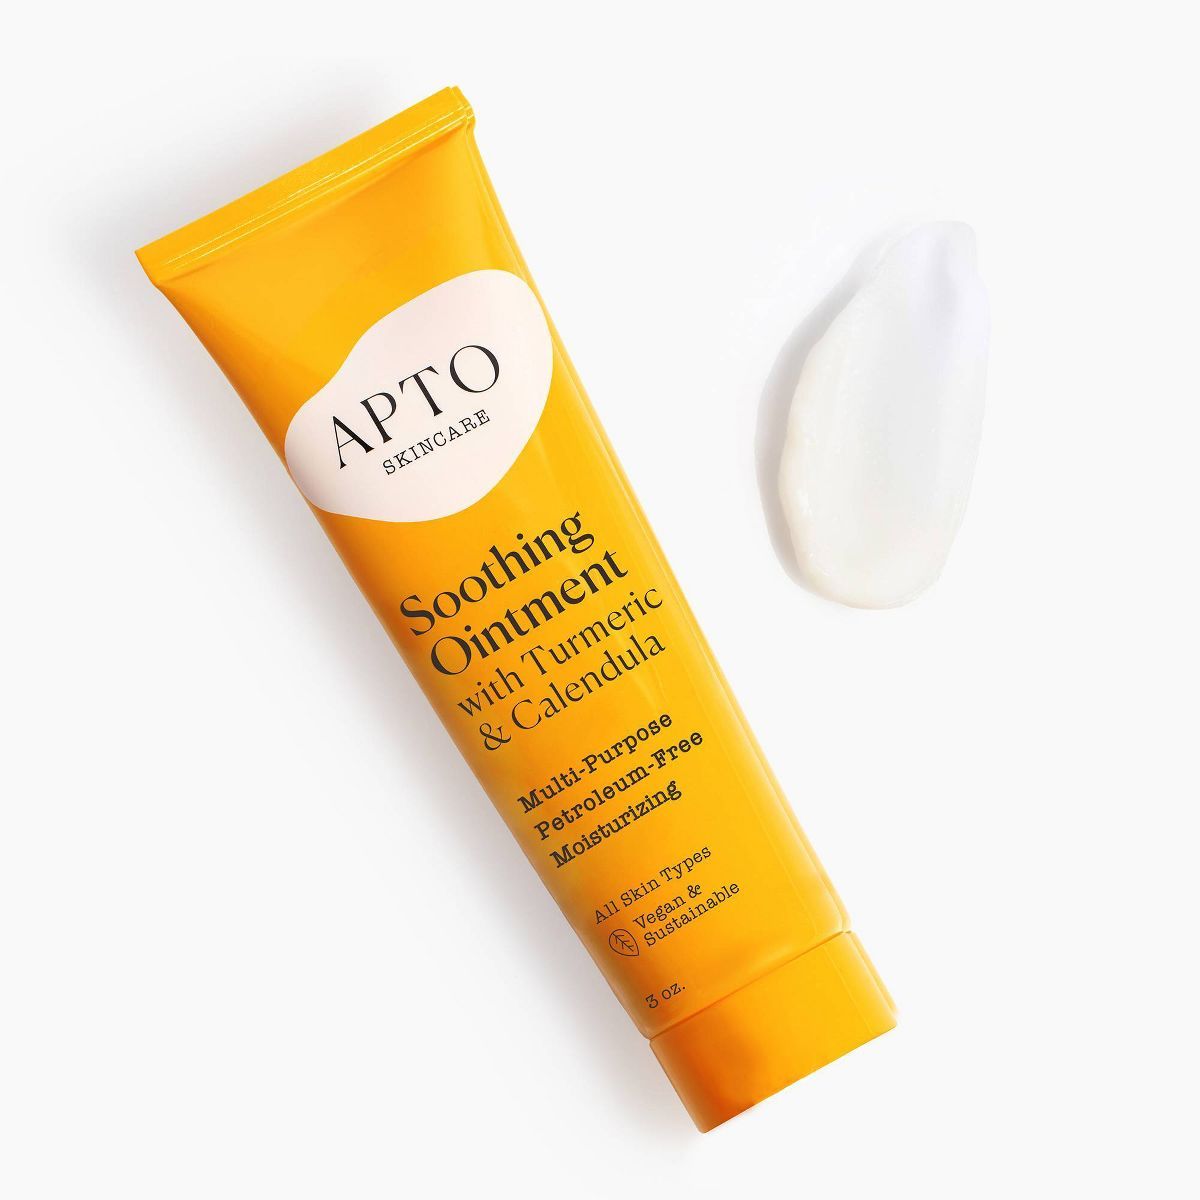 APTO Skincare Soothing Face Moisturising Barrier Cream with Turmeric and Calendula - 3oz | Target